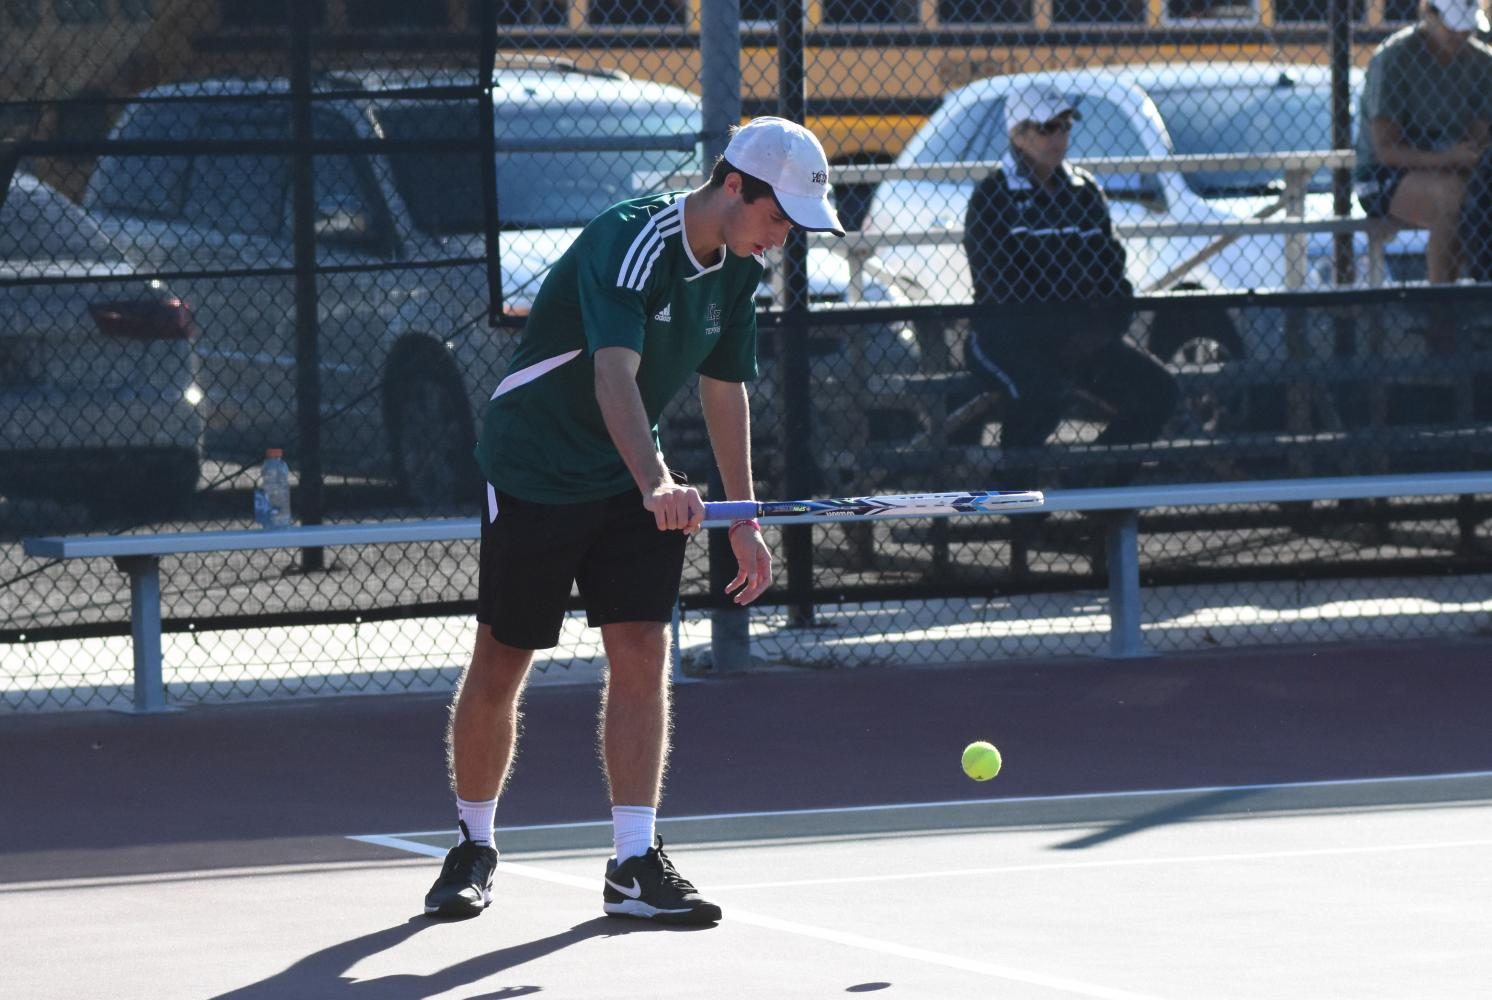 Guynes bounces a tennis ball before a serve during a tournament at K-Park.